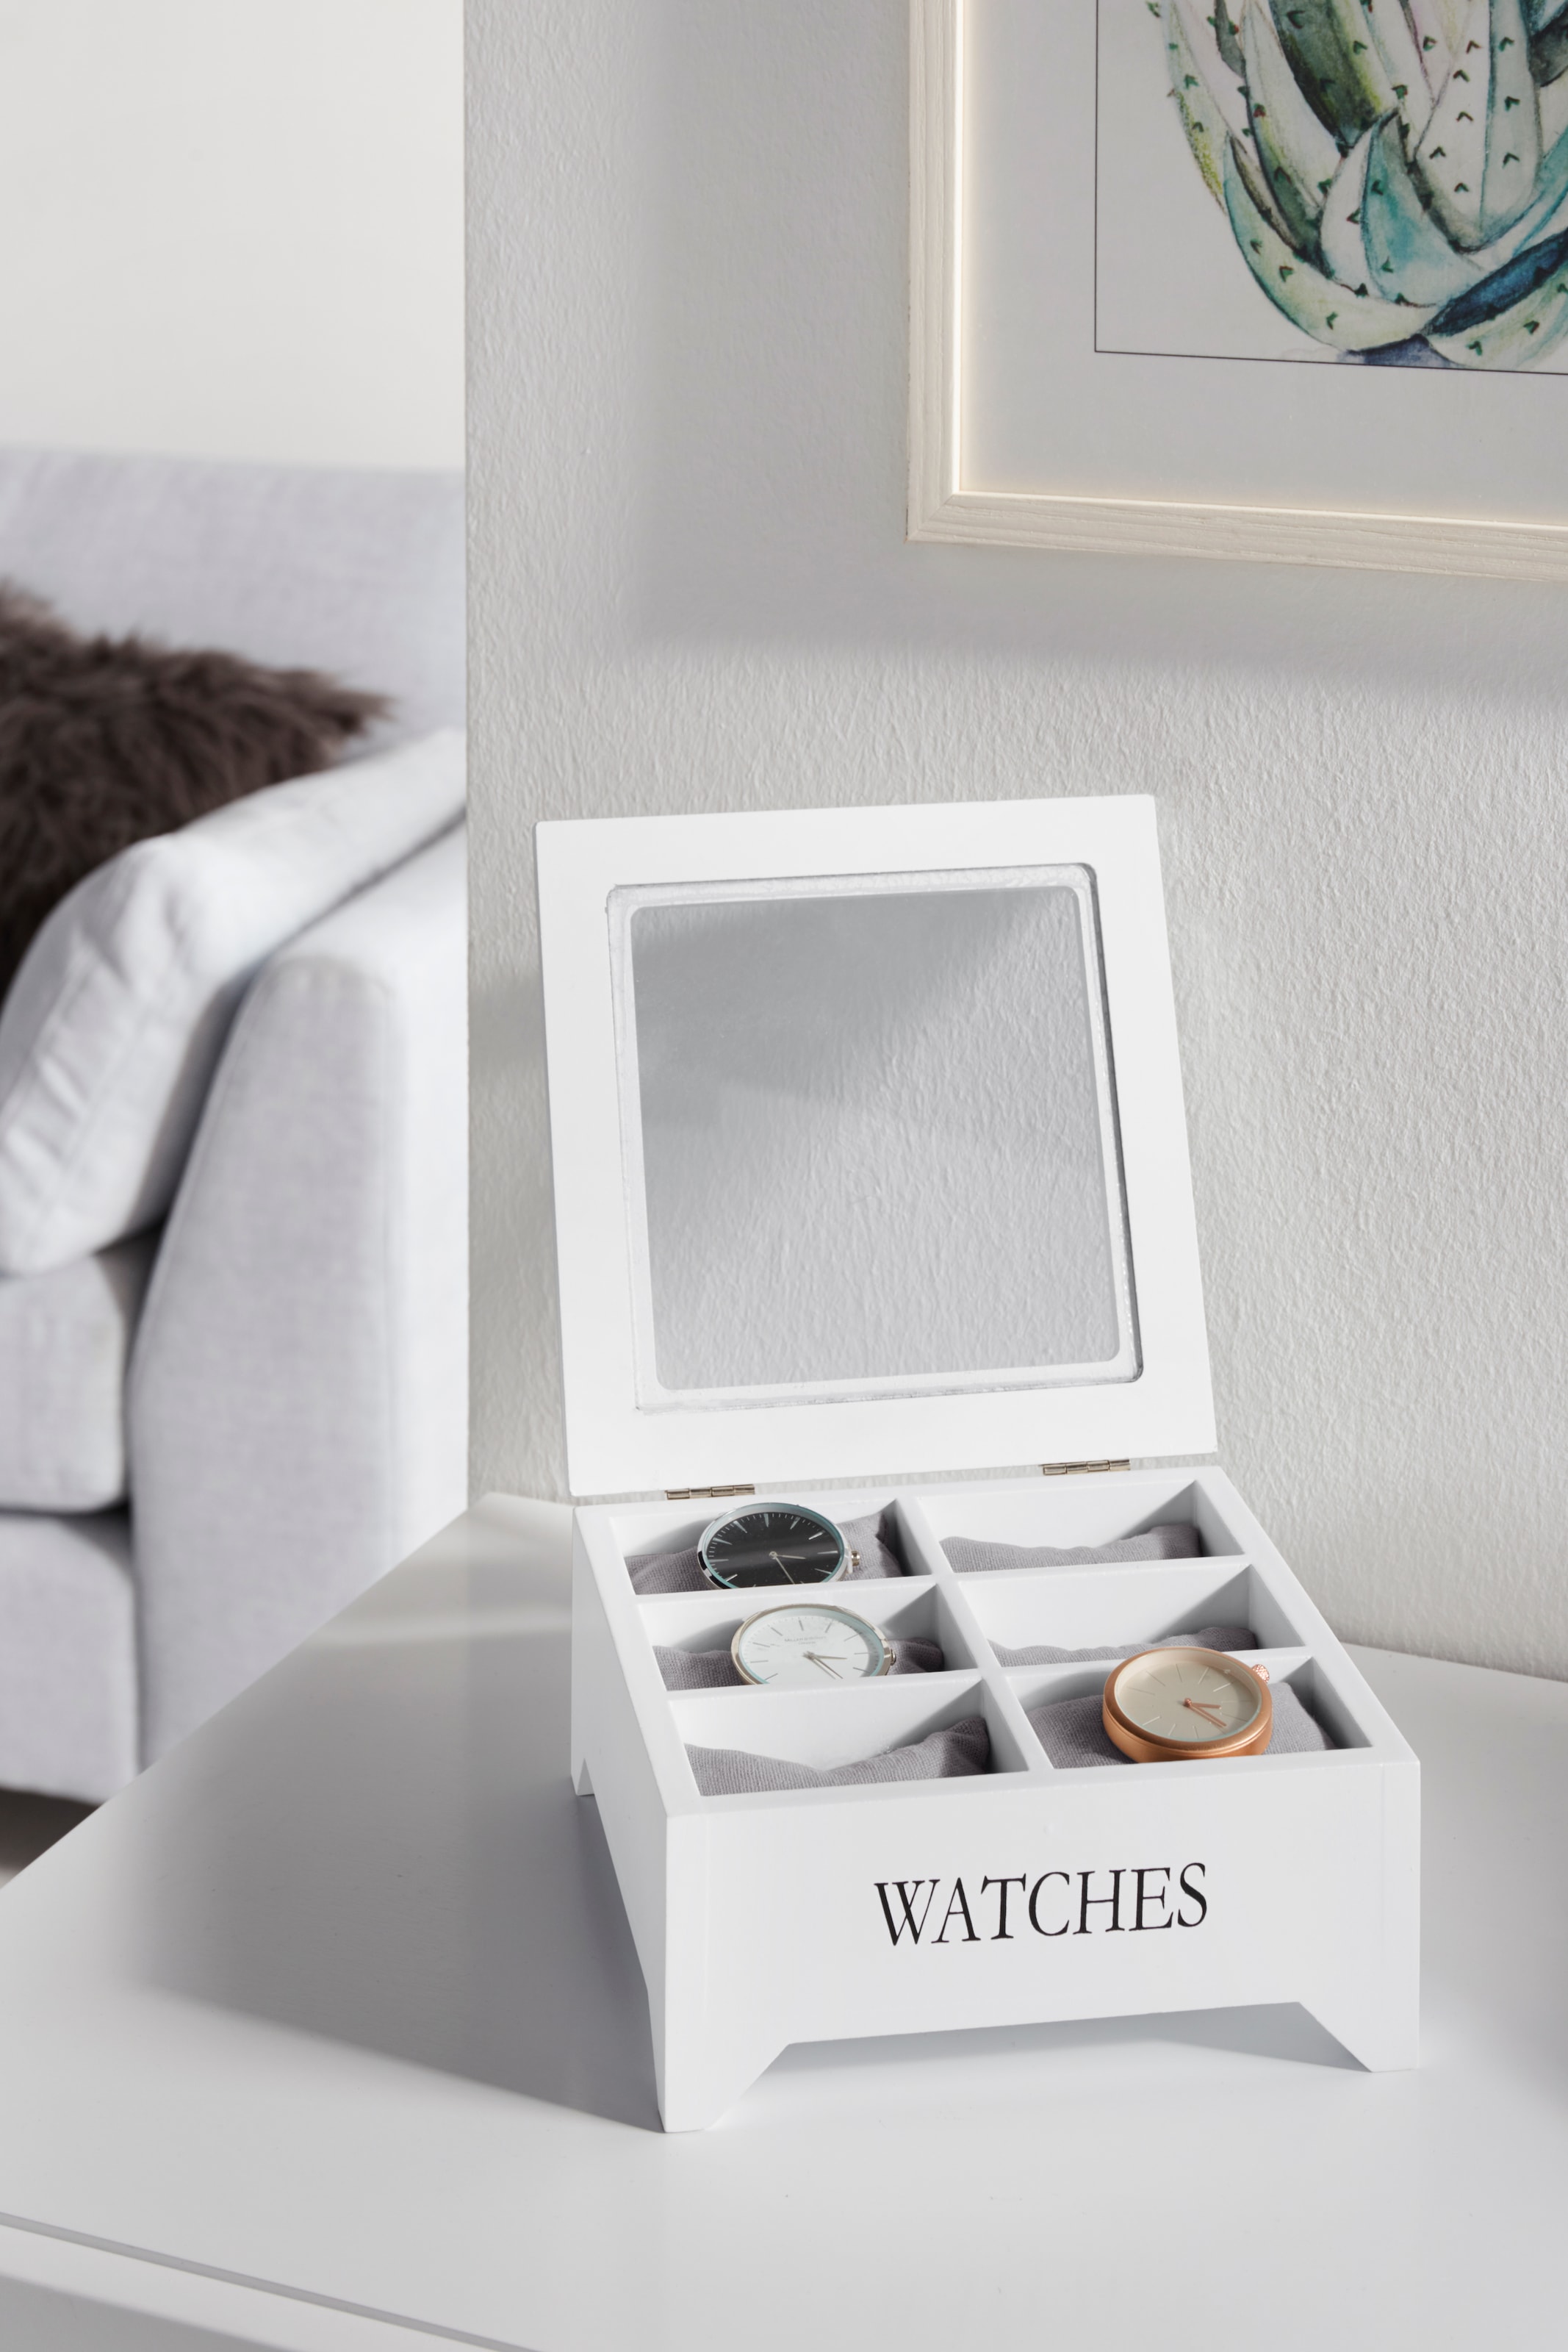 Home affaire Uhrenbox »WATCHES«